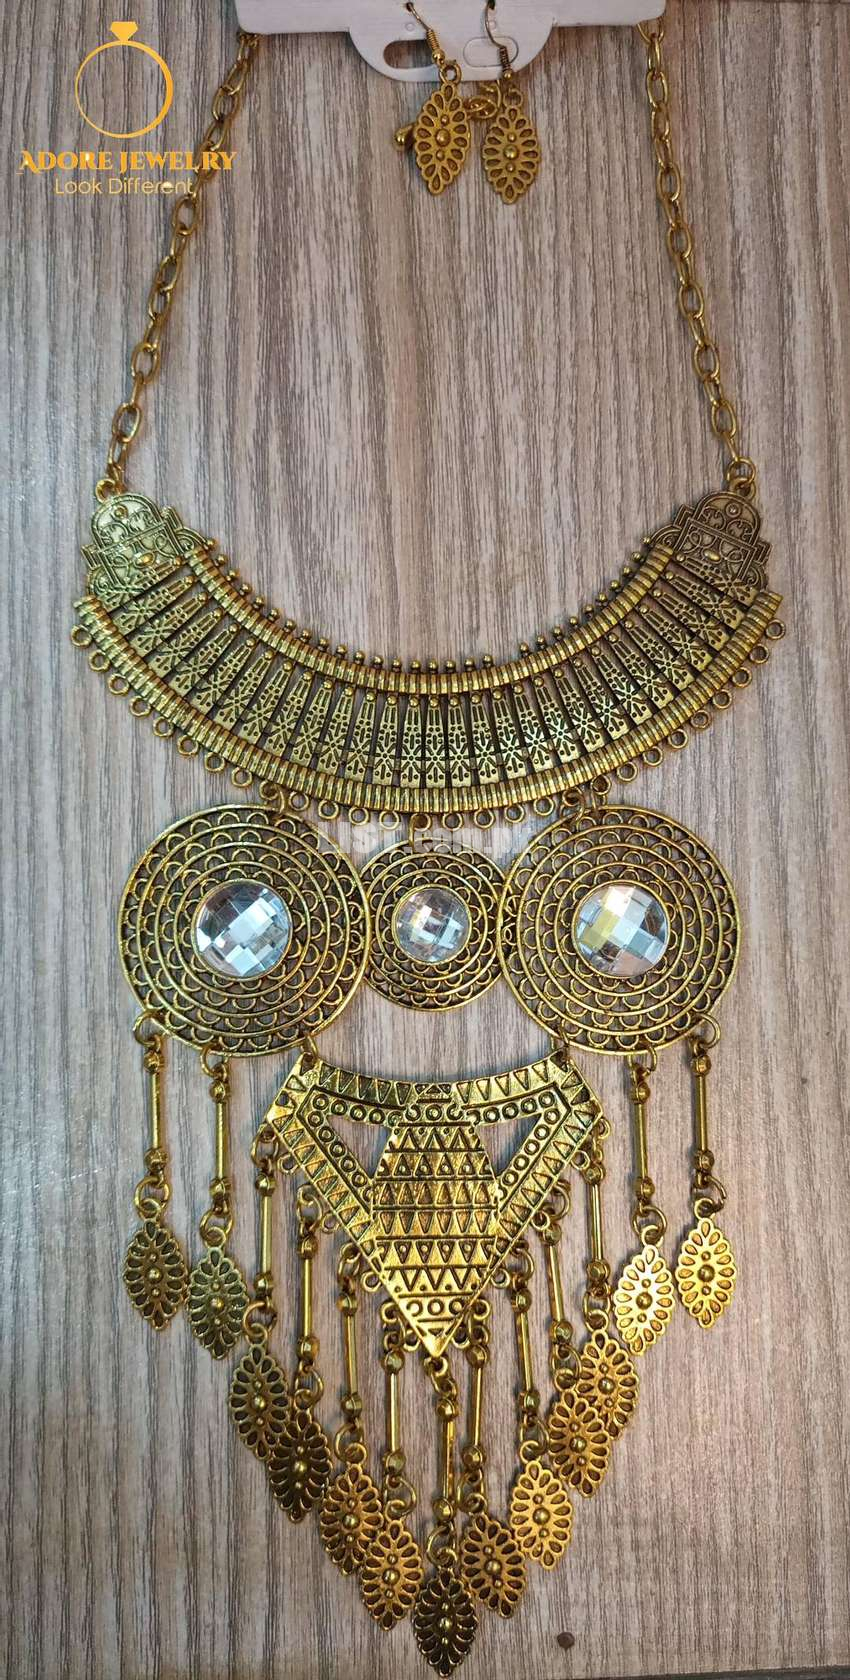 Antique golden jewelry set